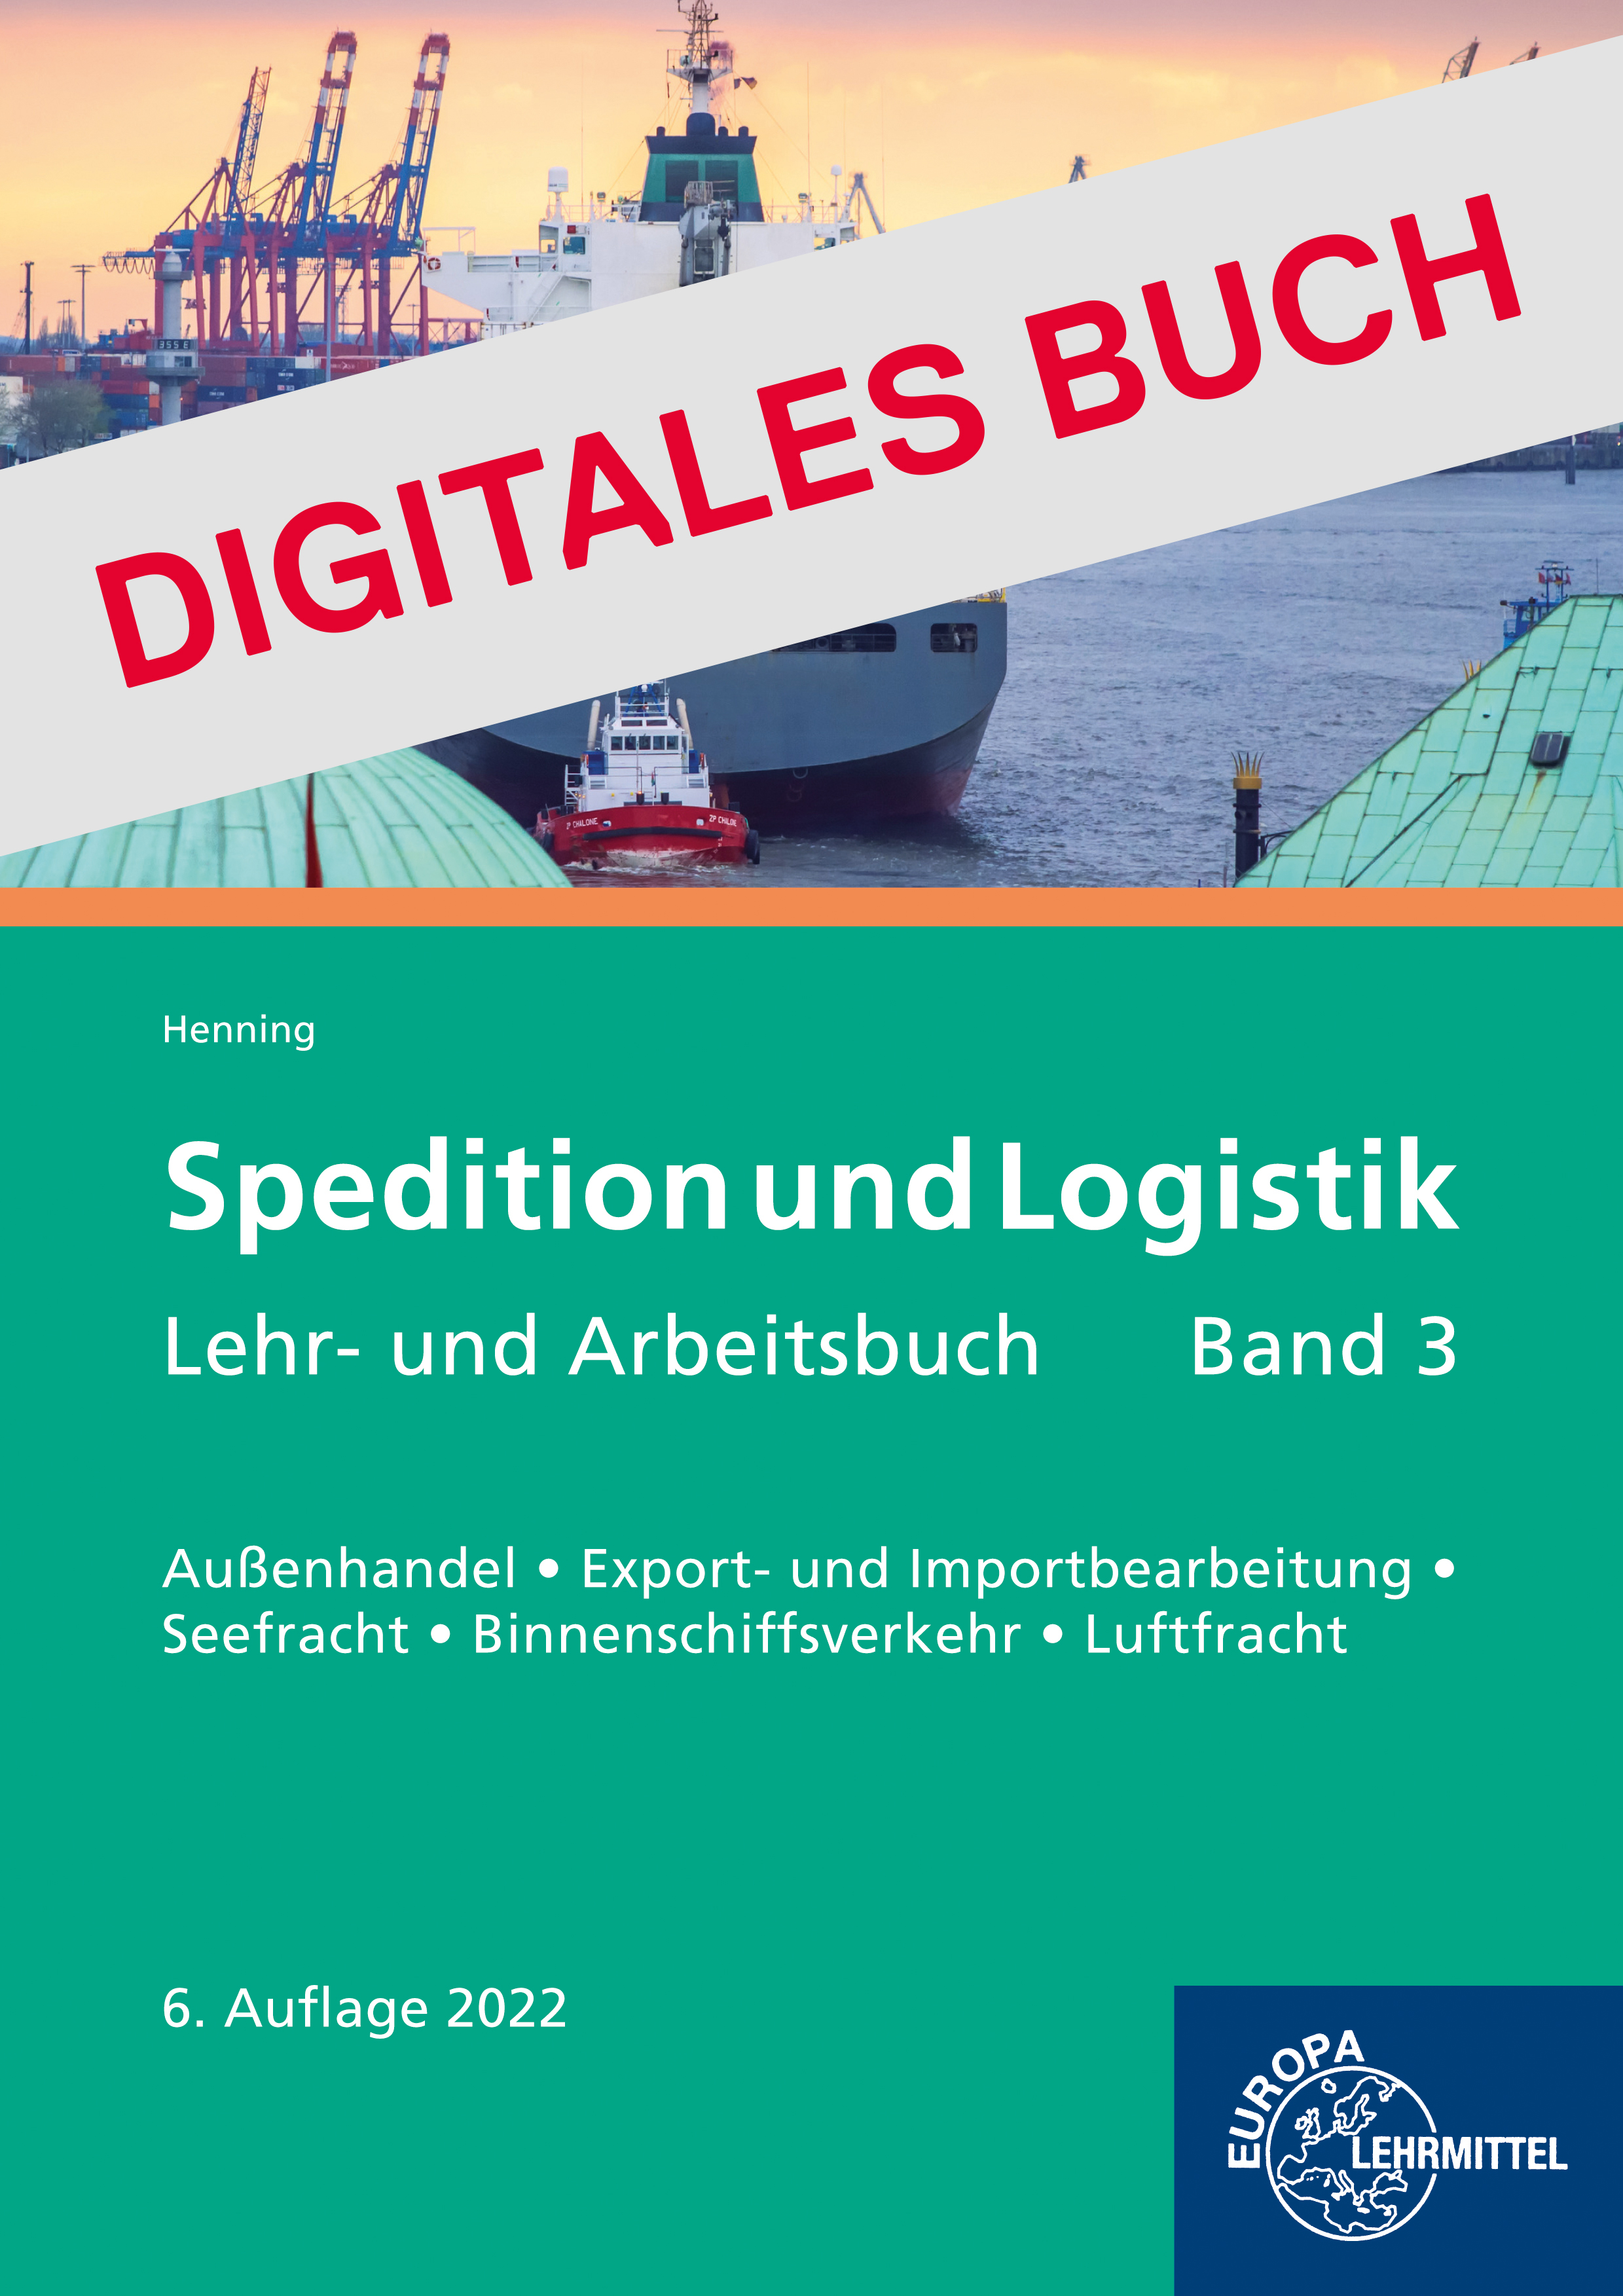 Spedition und Logistik, Band 3 - Digitales Buch